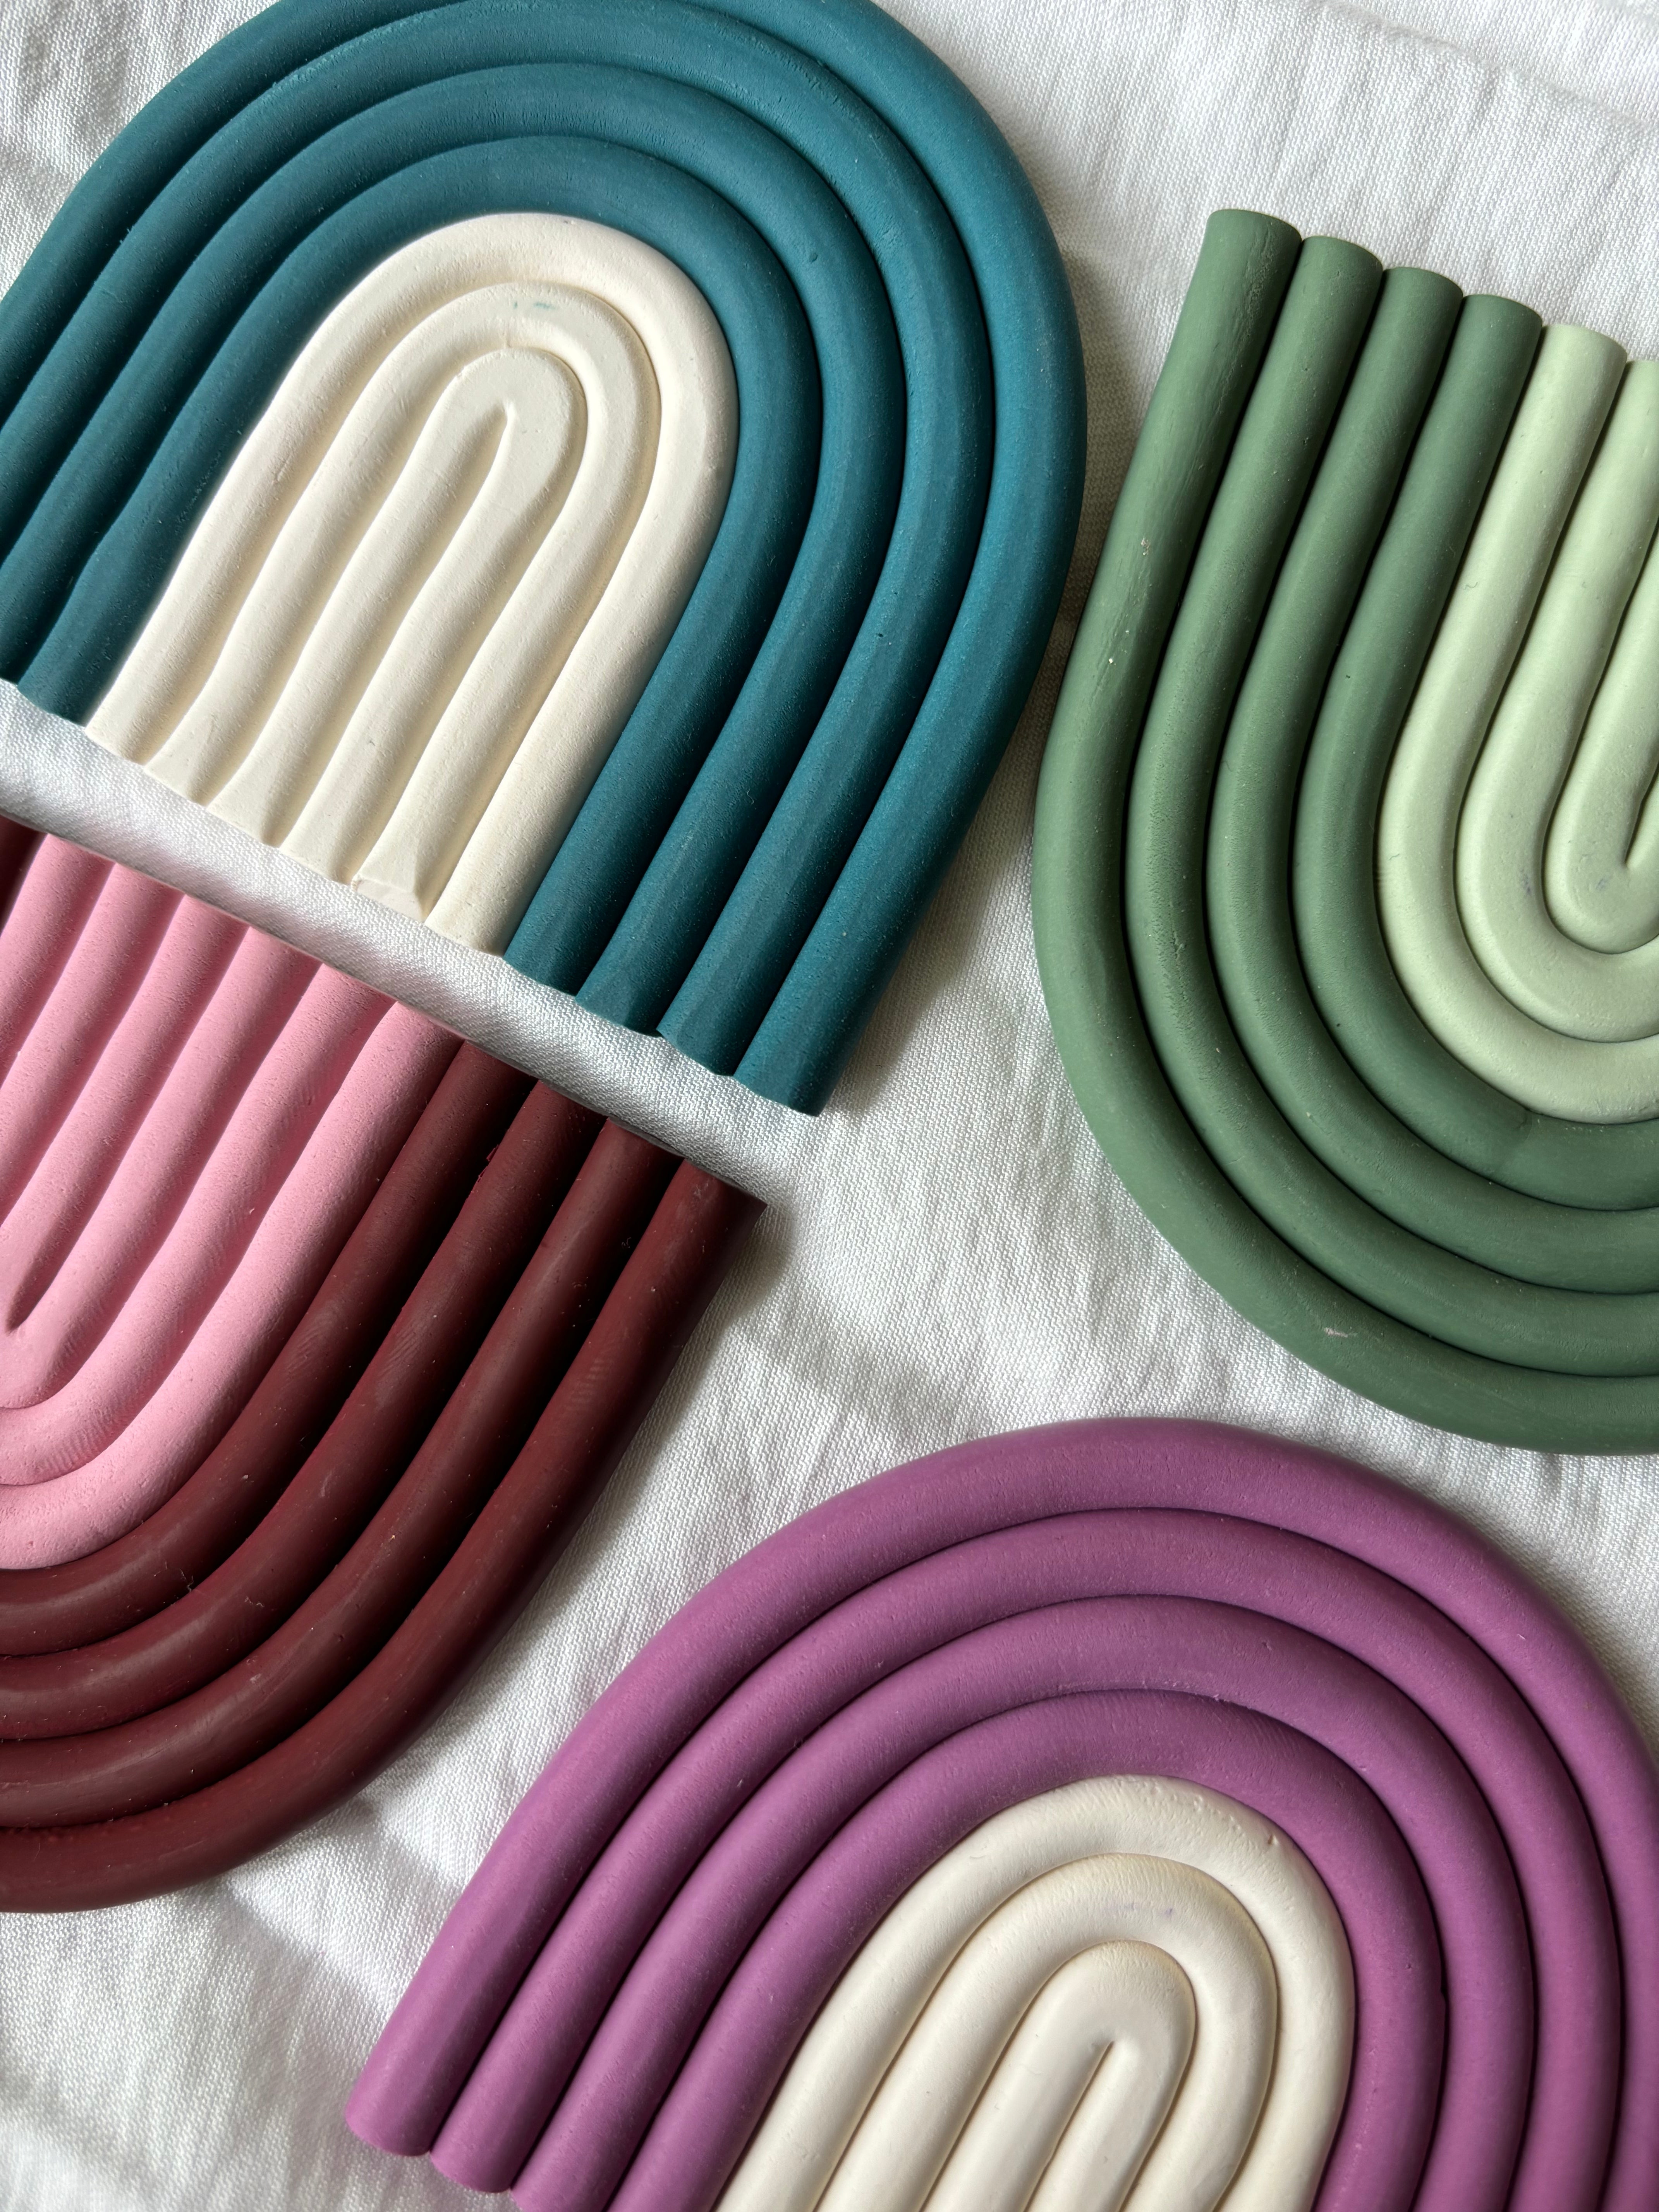 Rainbow Coasters: Multicolors Available